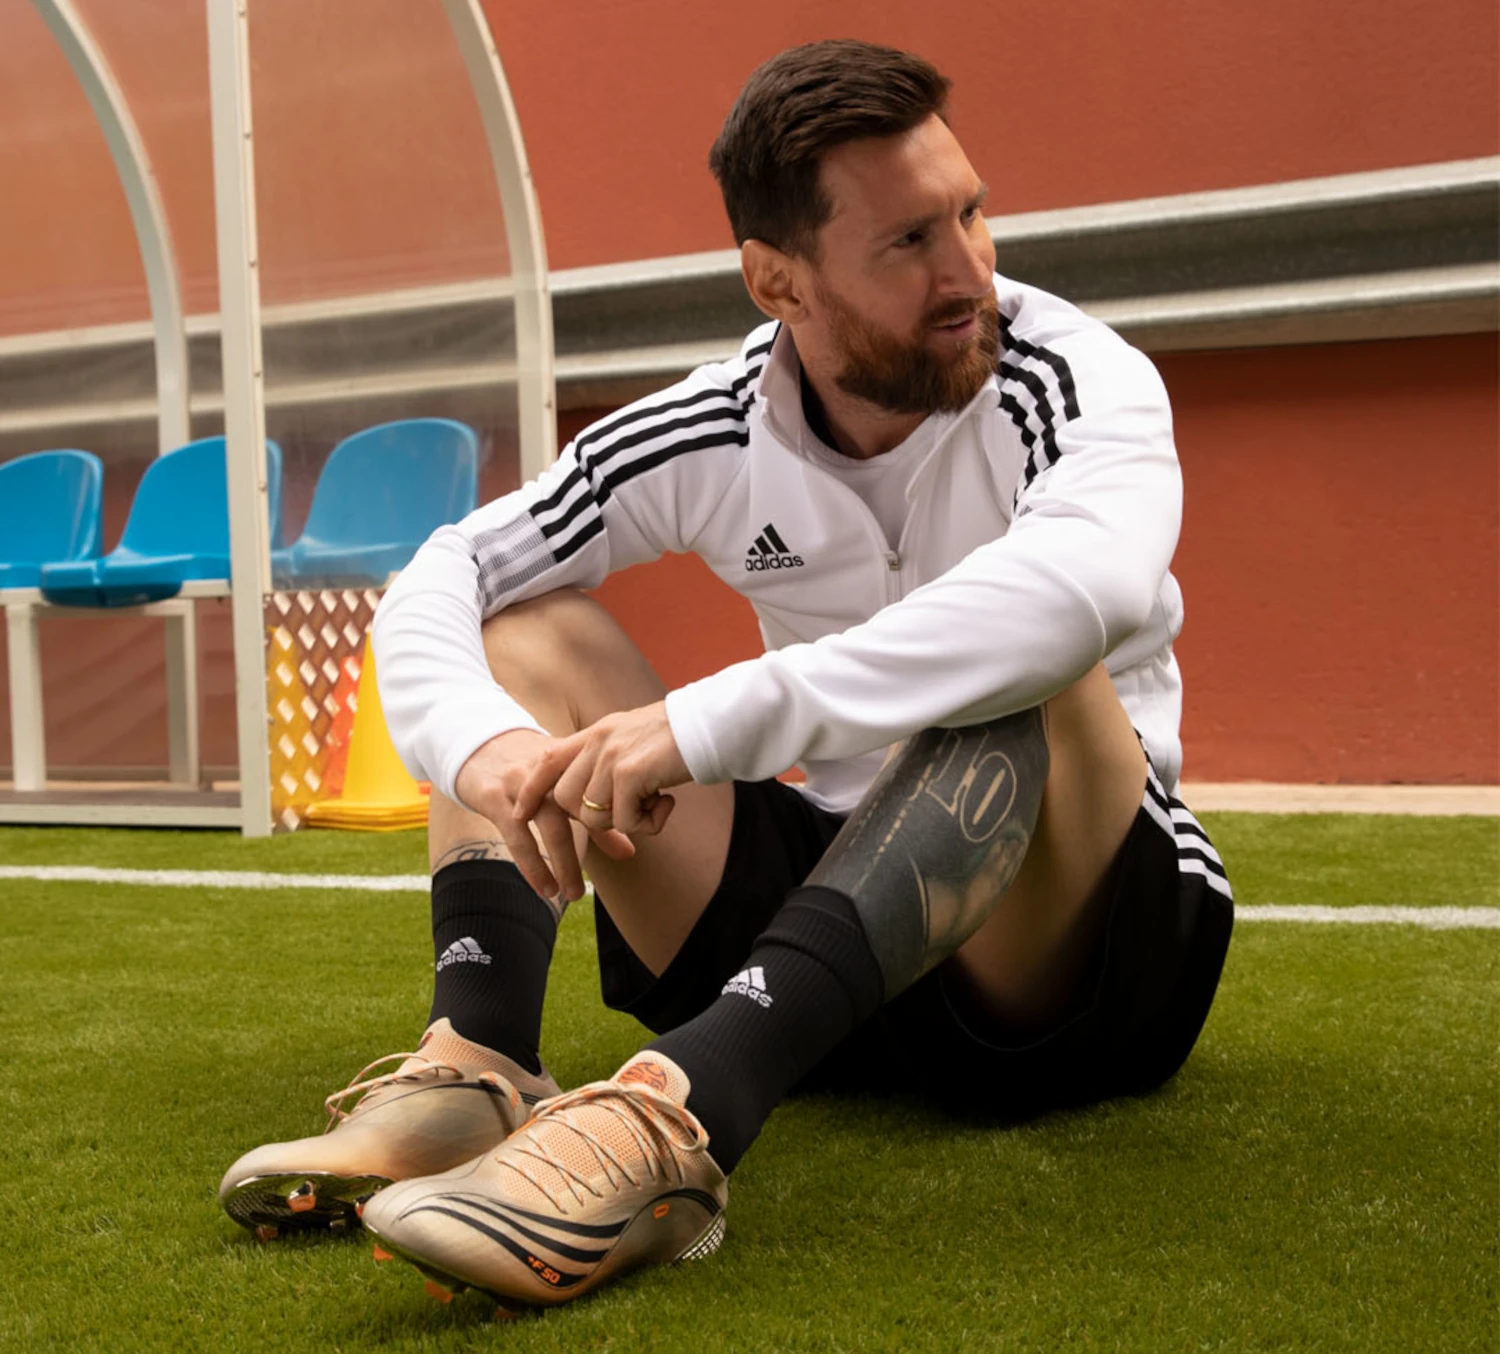 Vormen Hover bemanning Bad Bunny narrates an Adidas ad dedicated to Lionel Messi